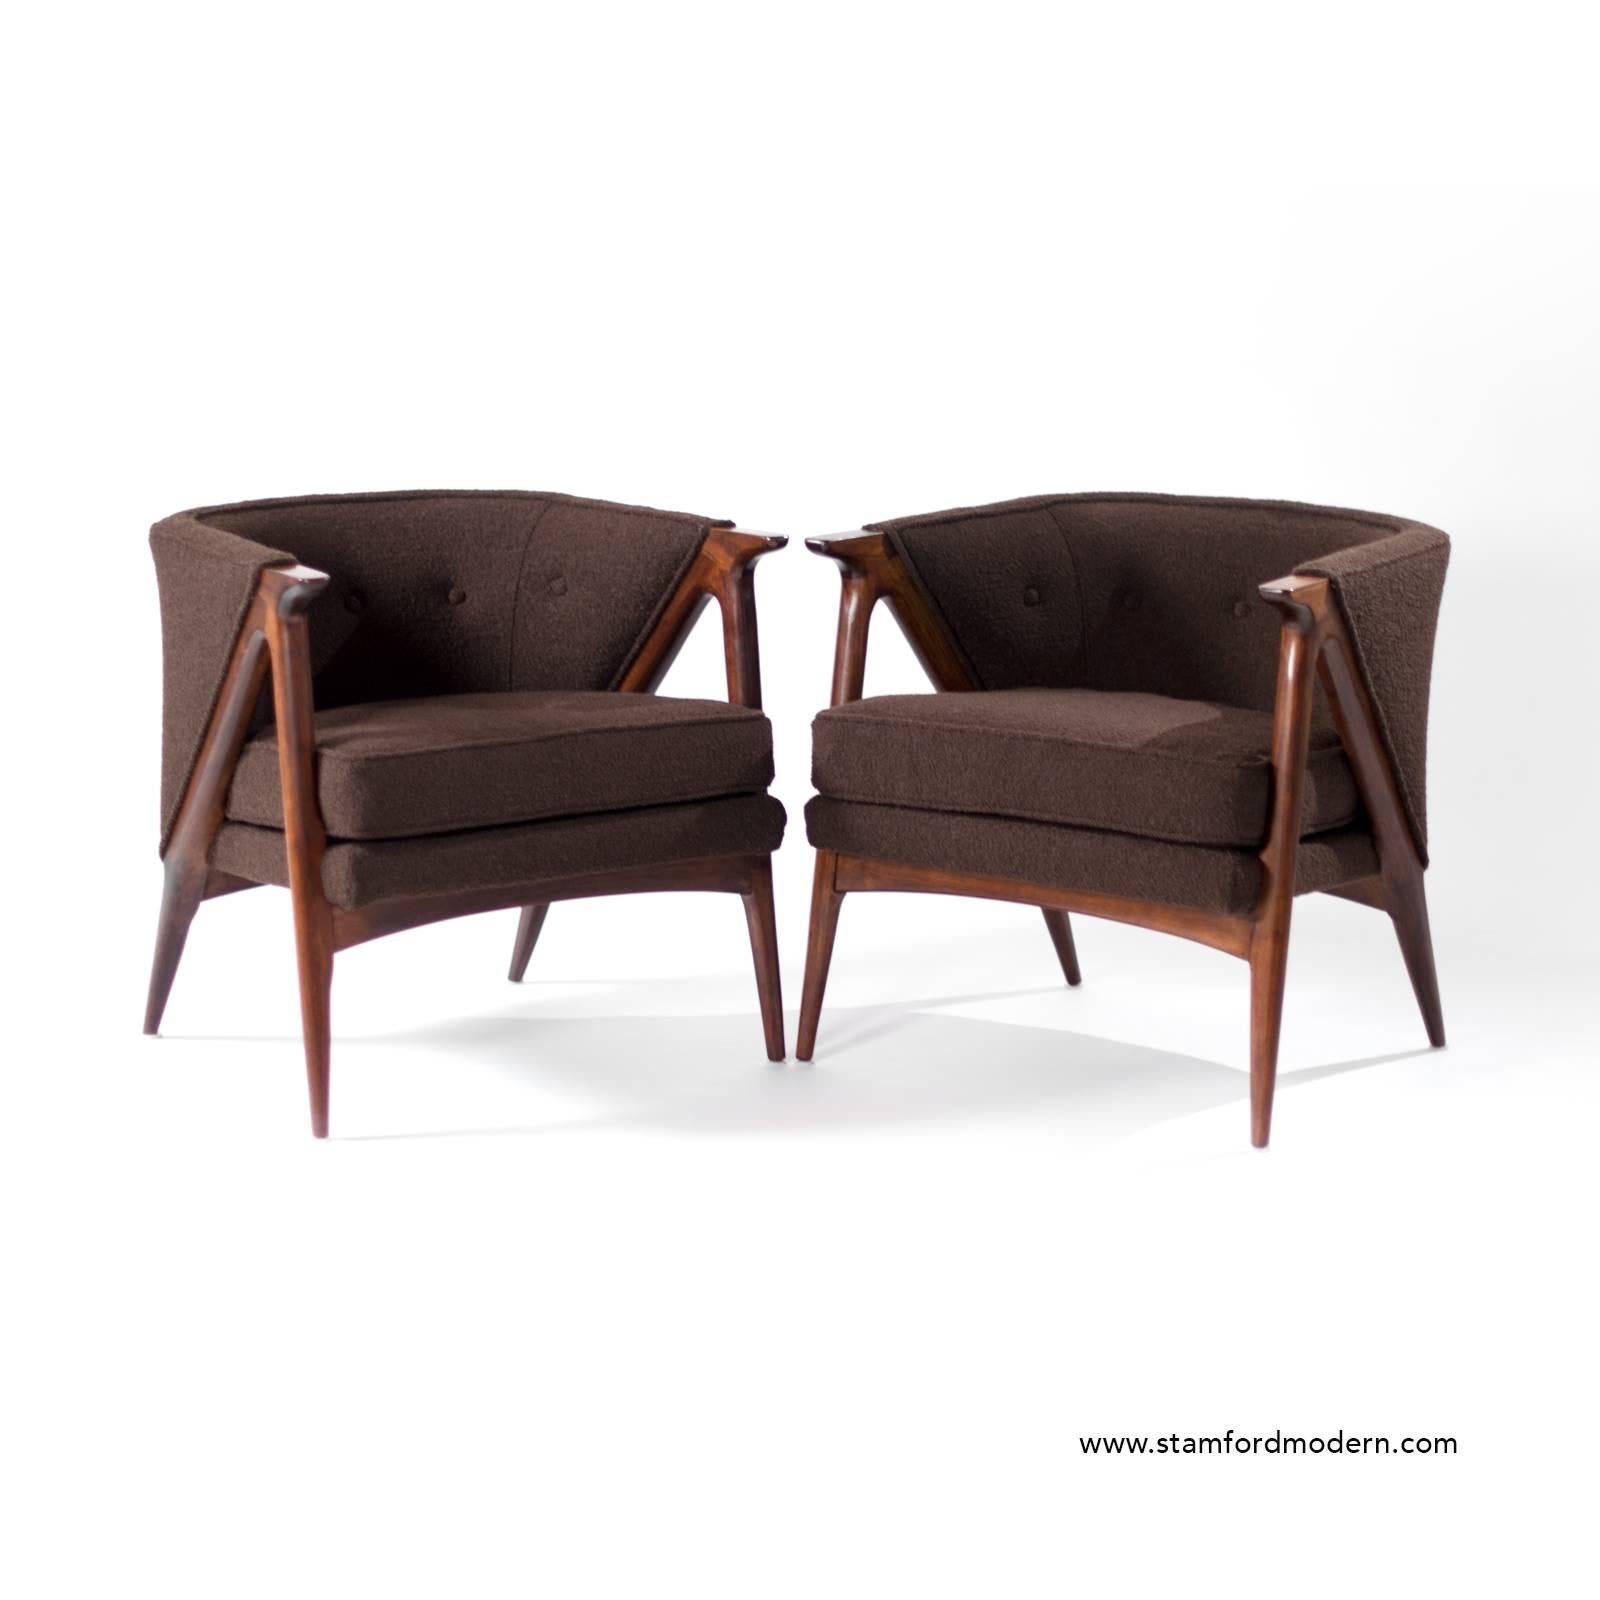 Mid-Century Modern Pair of Sculptural Danish Modern Lounge Chairs, 1950s